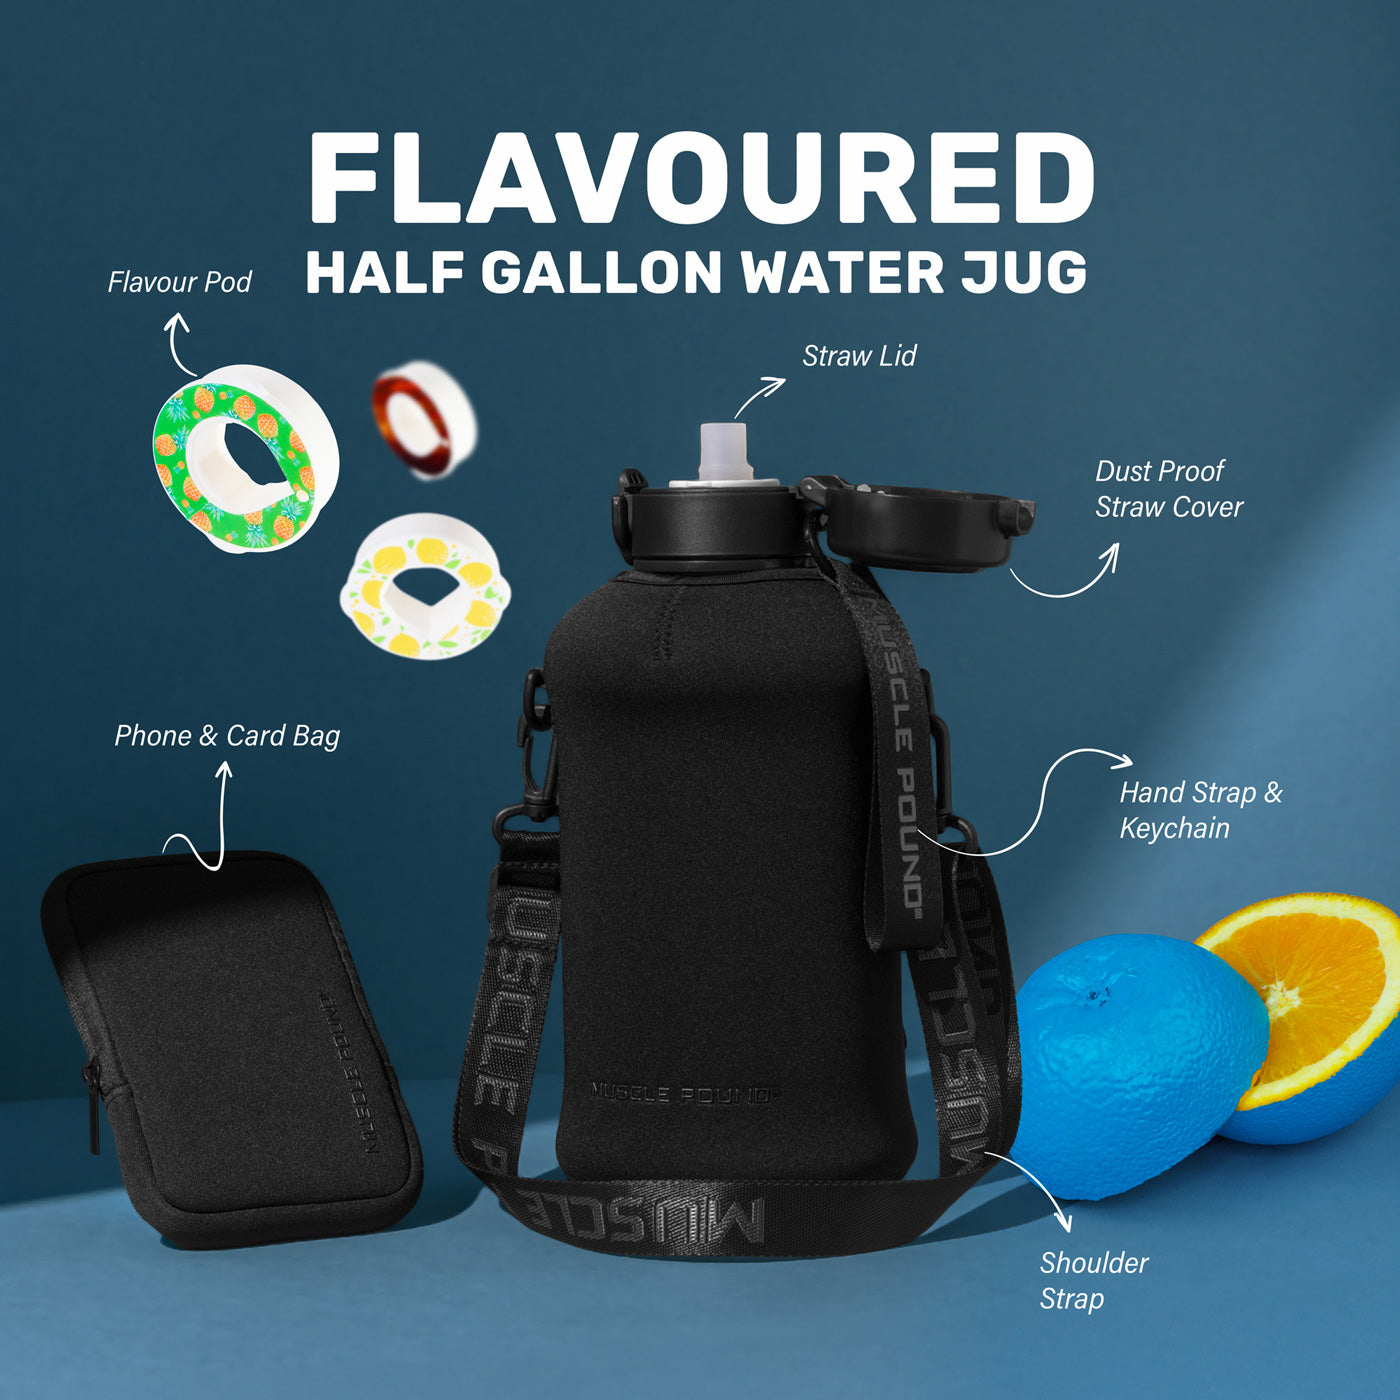 Flavoured Half Gallon Water Jug